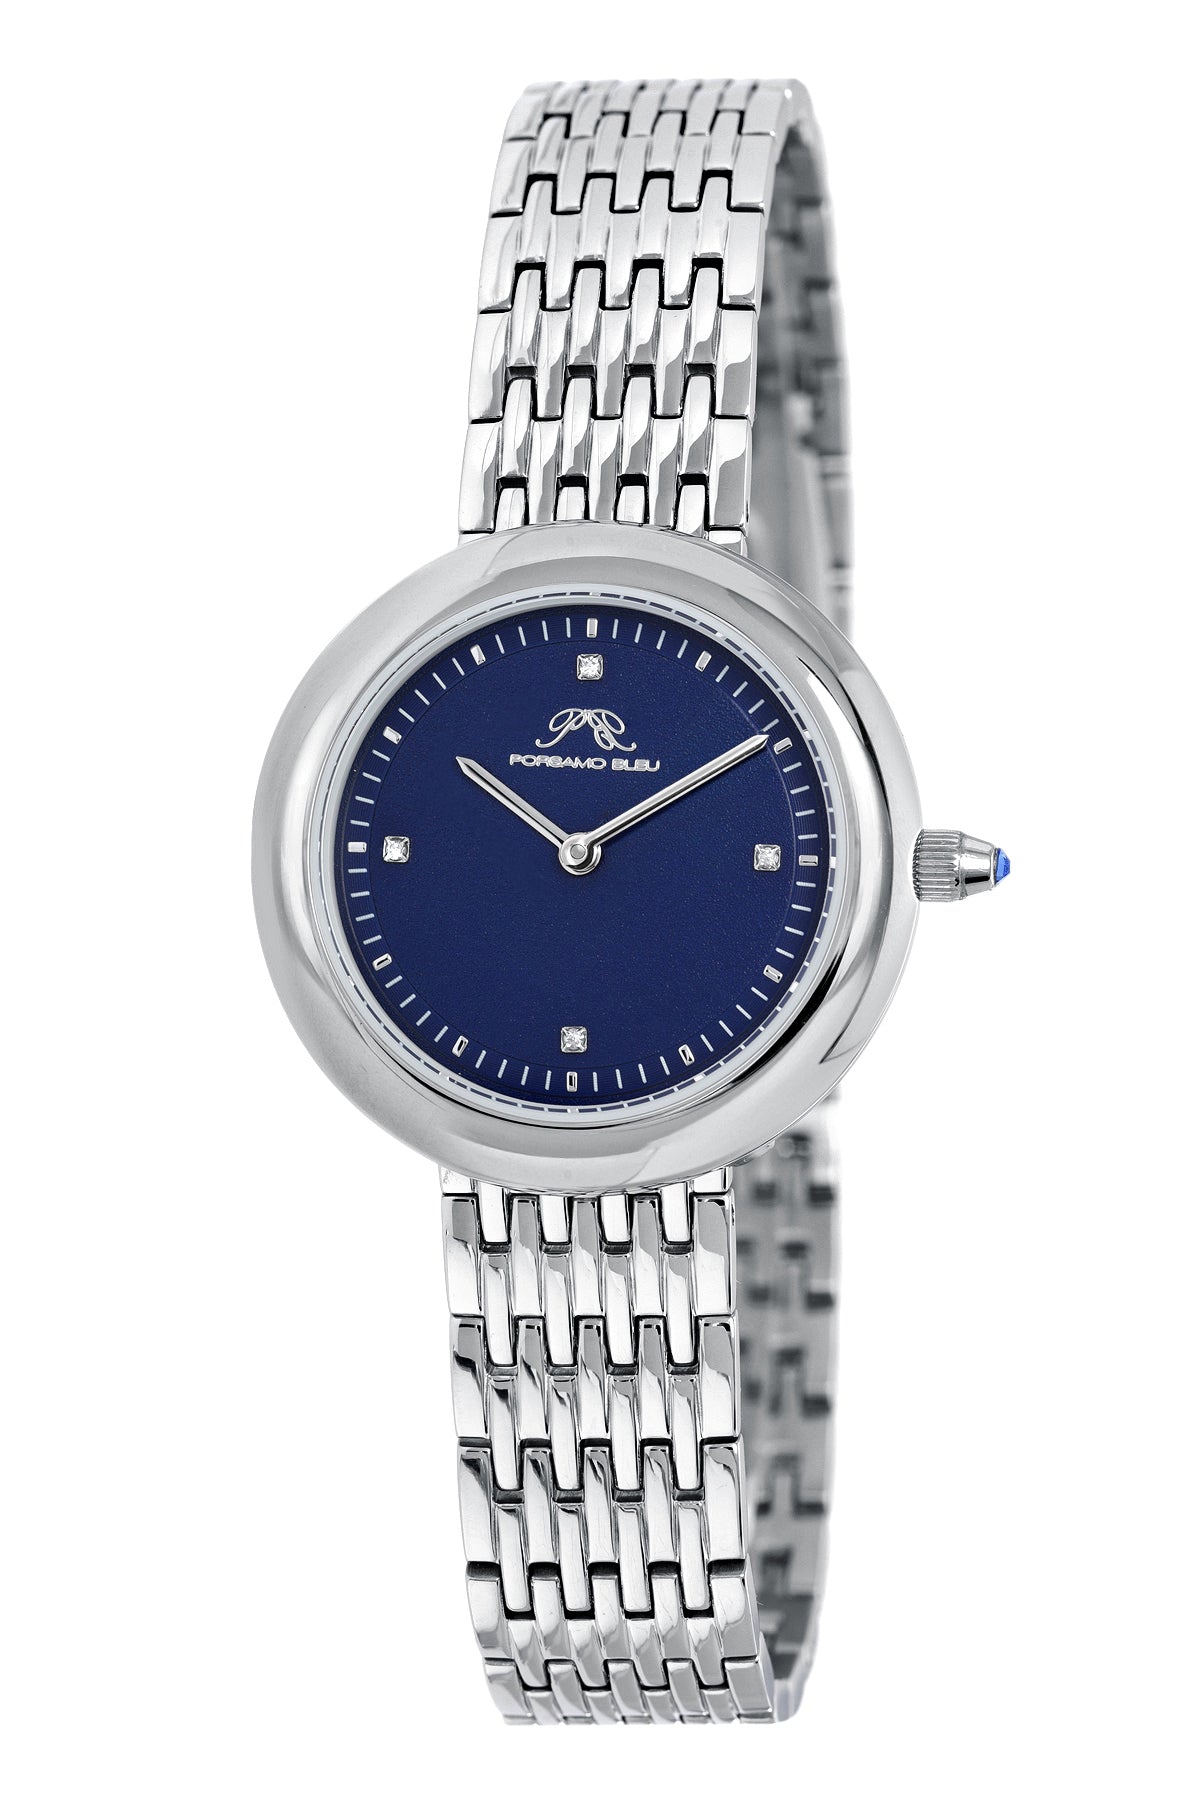 Porsamo Bleu Florentina Luxury Diamond Women's Stainless Steel Watch,  Blue, Silver 902AFLS